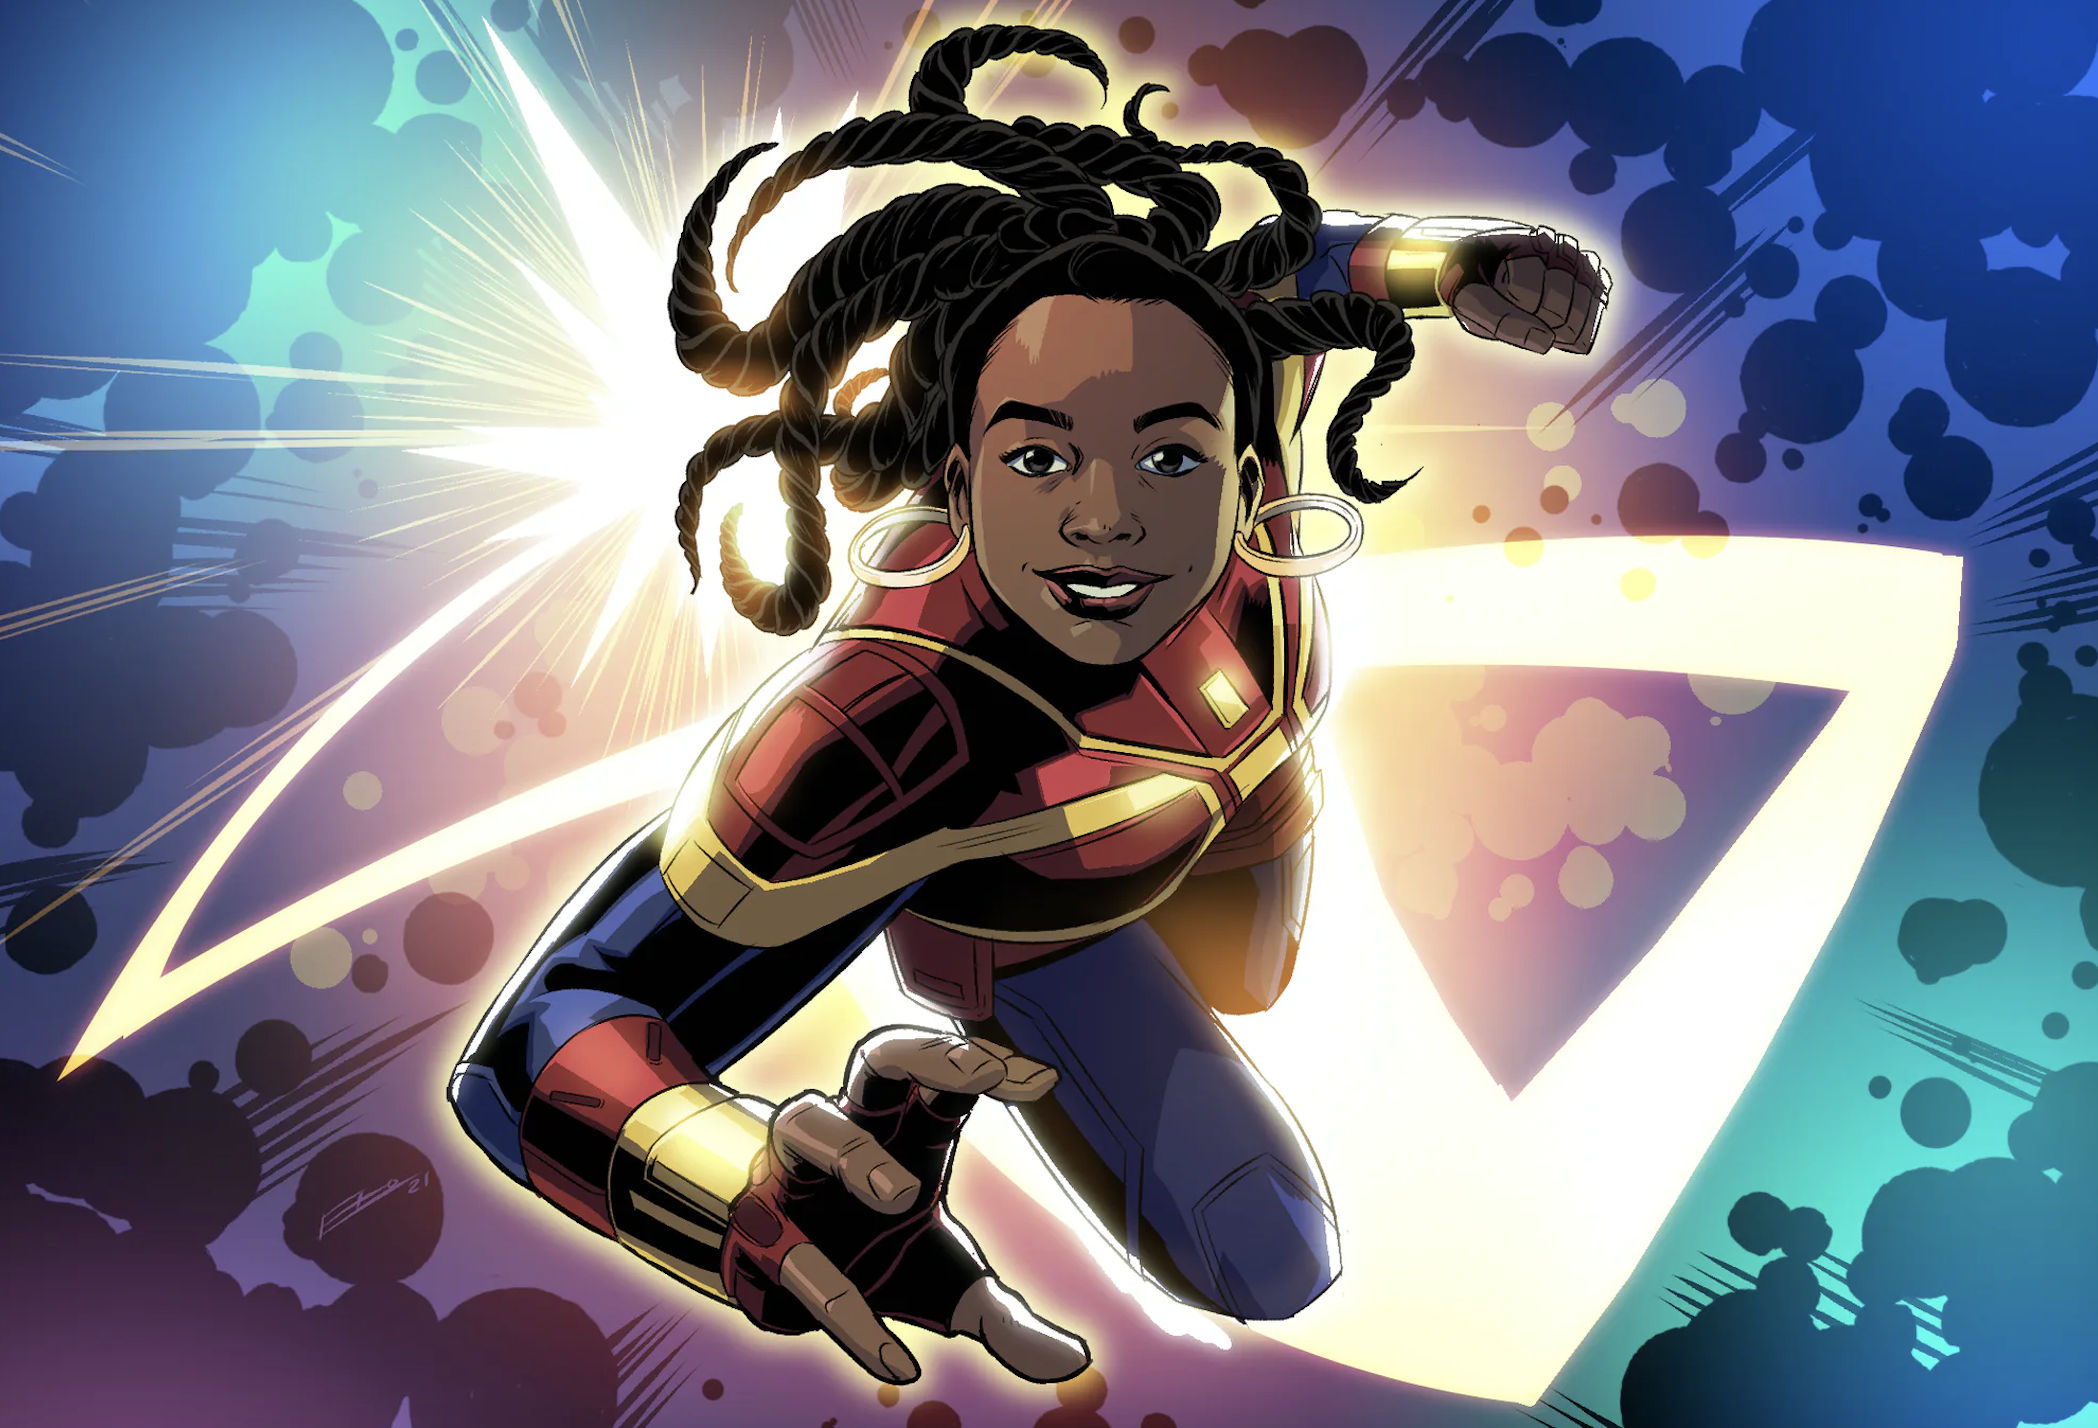 Illustrator Emilio Lopez imagines DaCosta as Captain Marvel, the subject of her next film, The Marvels